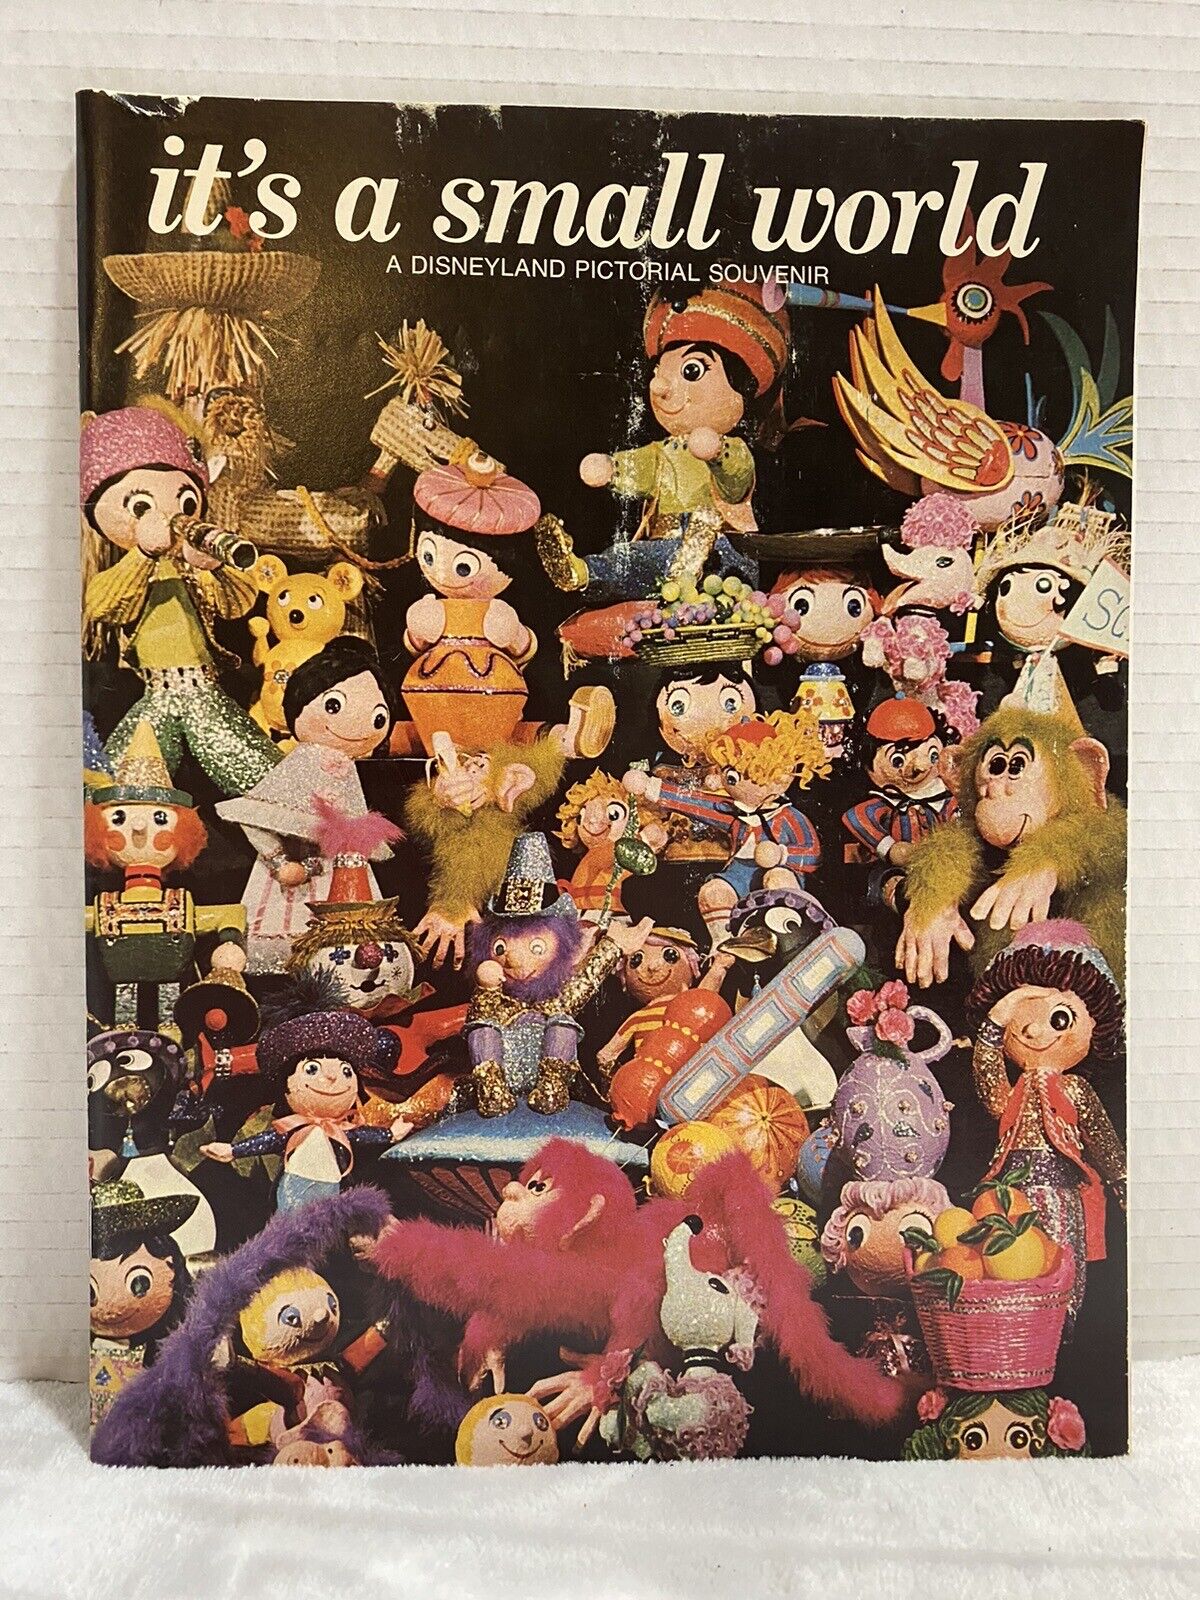 1978 Vintage Its a Small World Disneyland Pictorial Souvenir Book